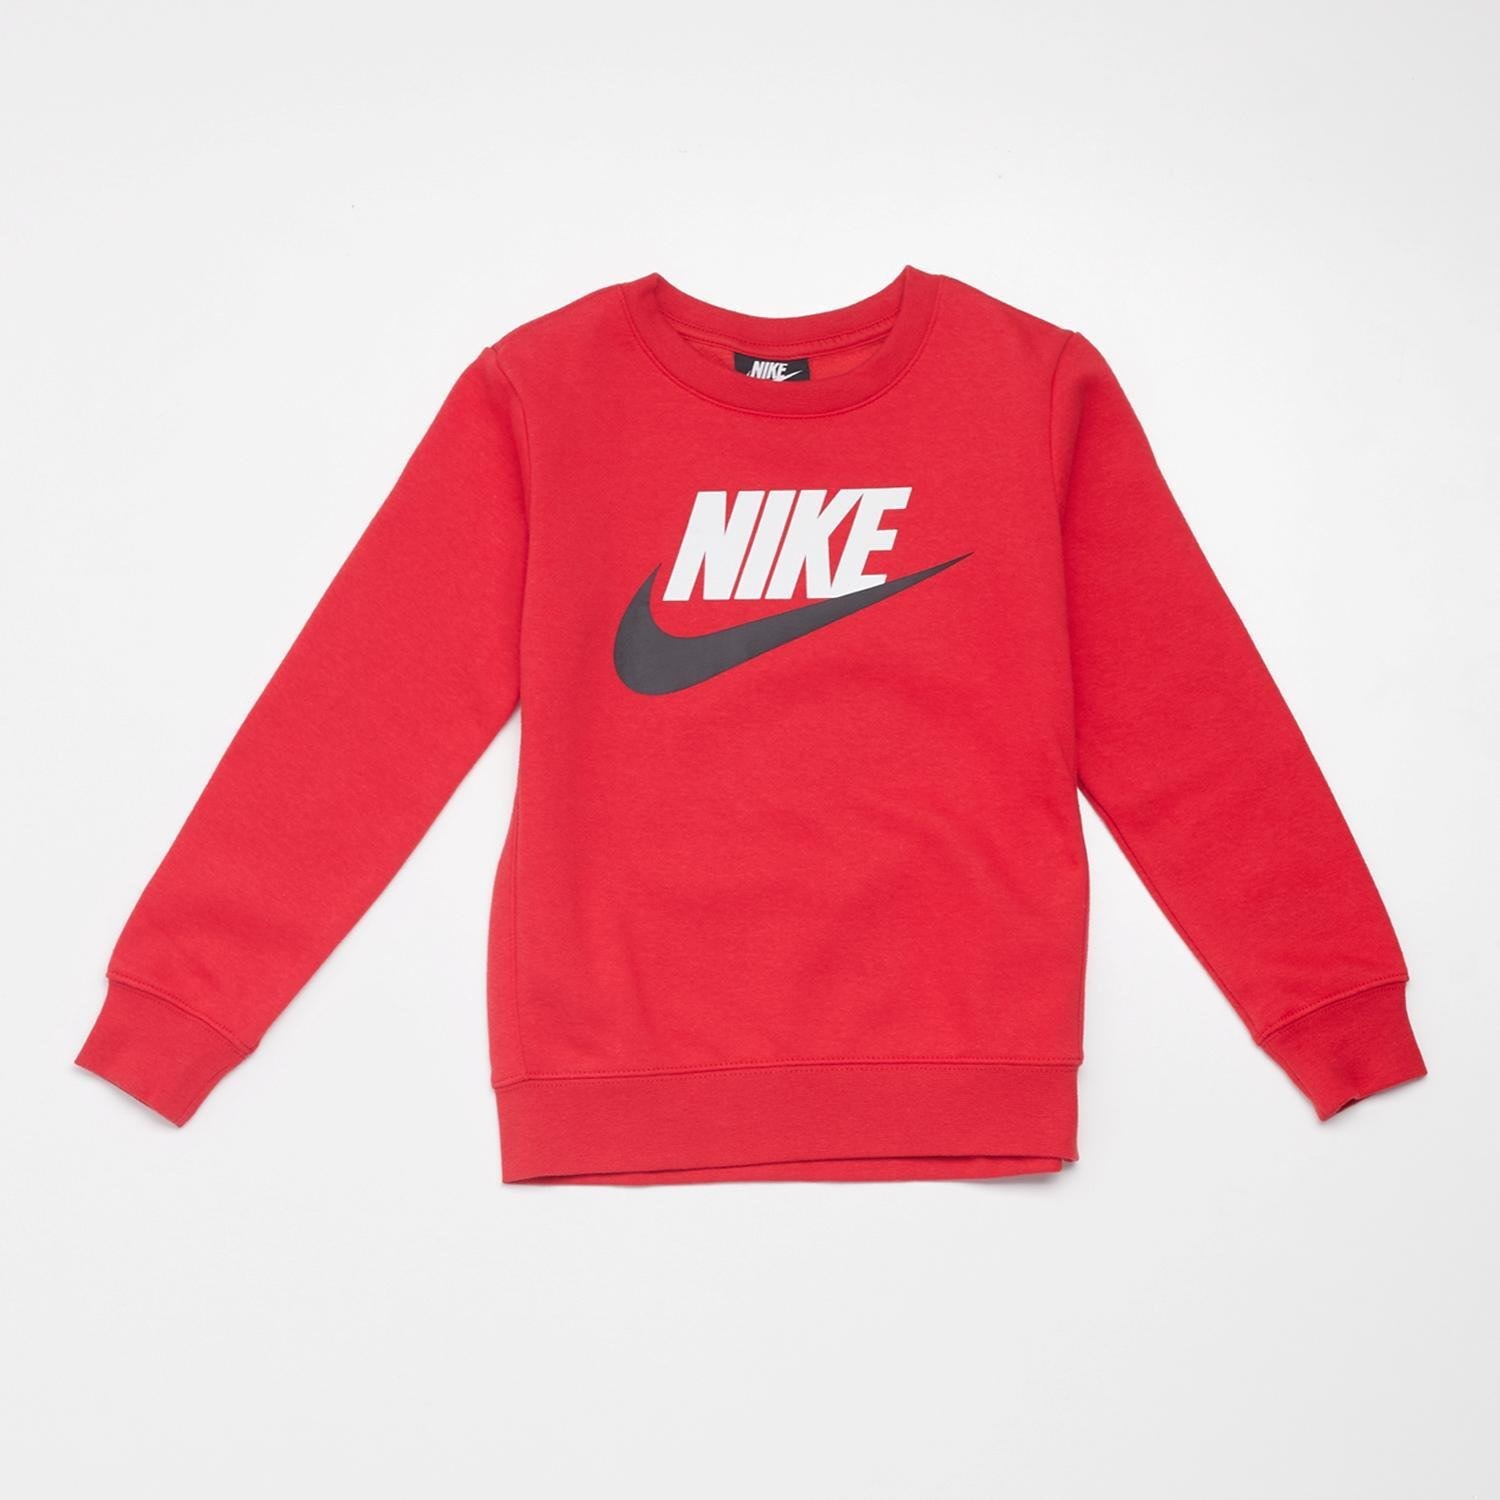 Nike Nike sweater rood kinderen kinderen